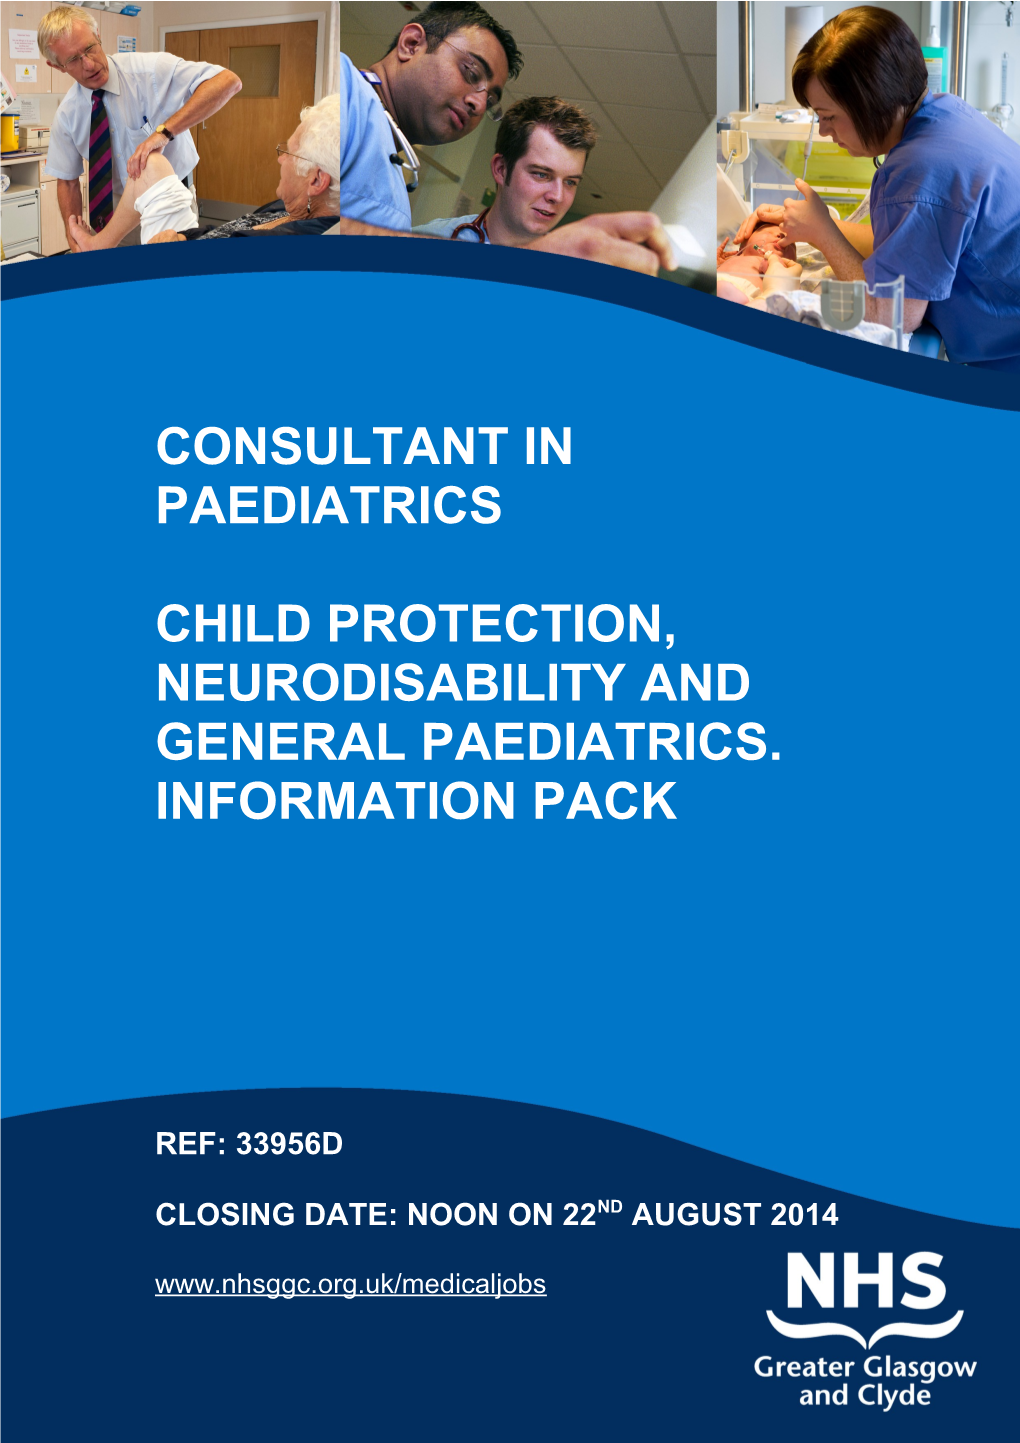 Child Protection, Neurodisability and General Paediatrics